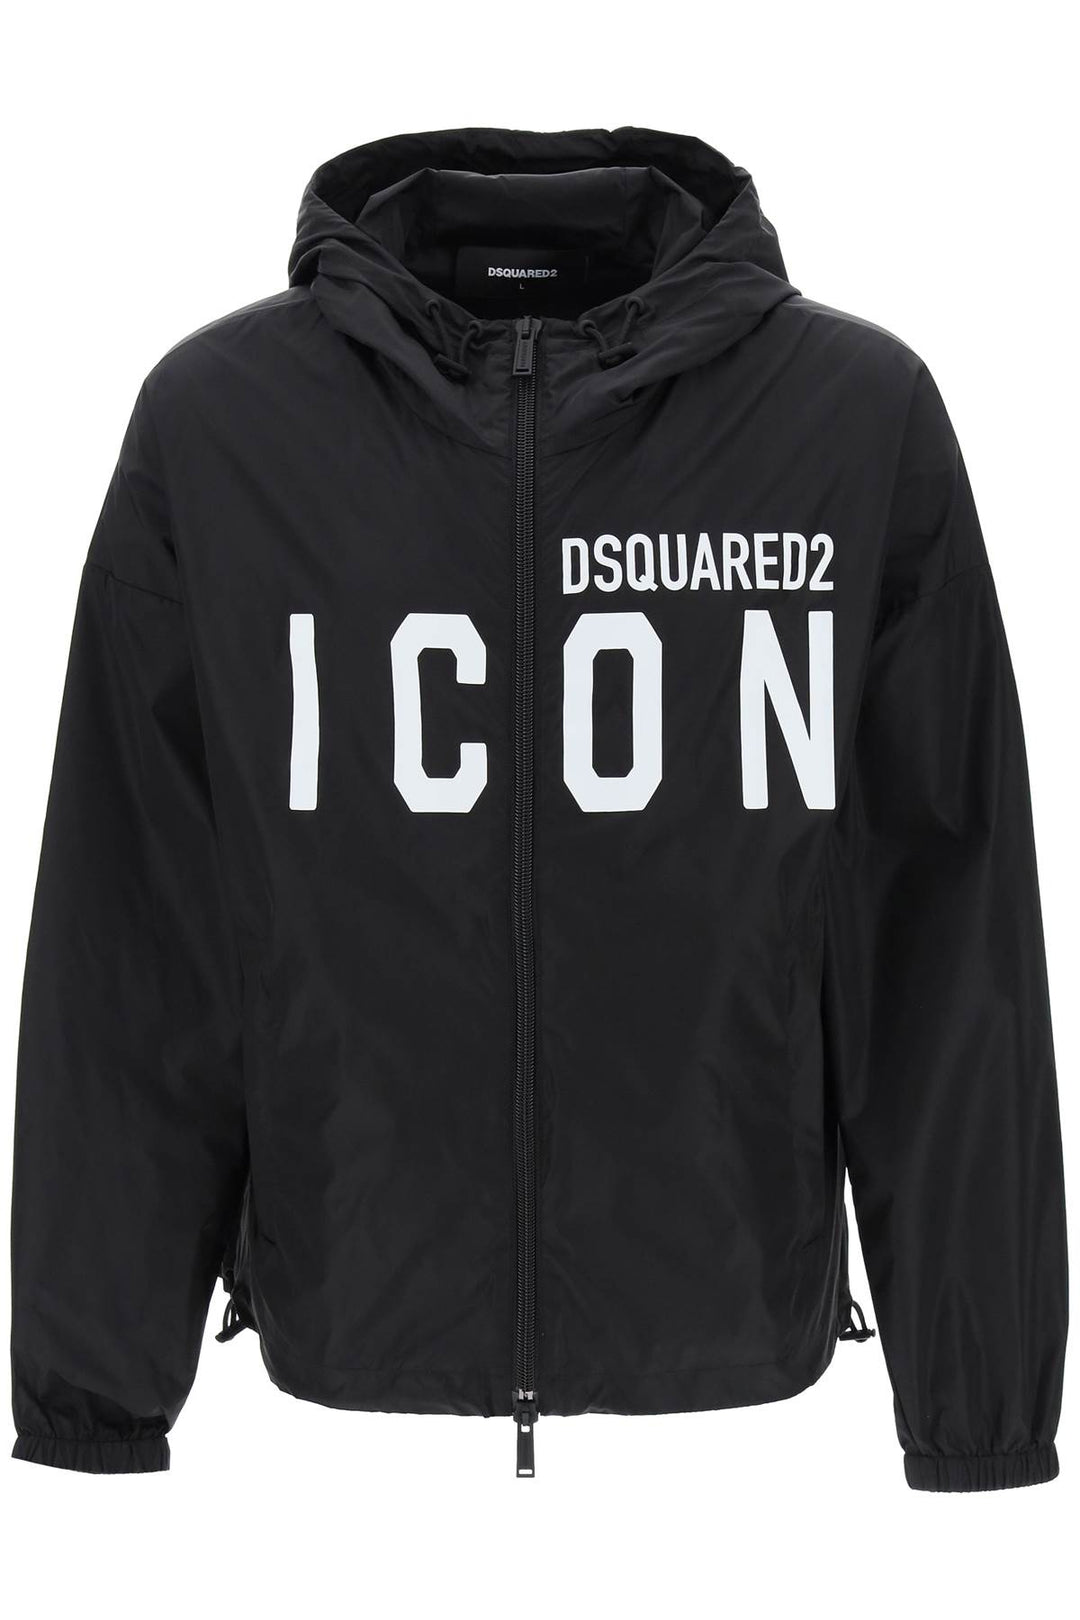 Dsquared2 Be Icon Windbreaker Jacket   Black